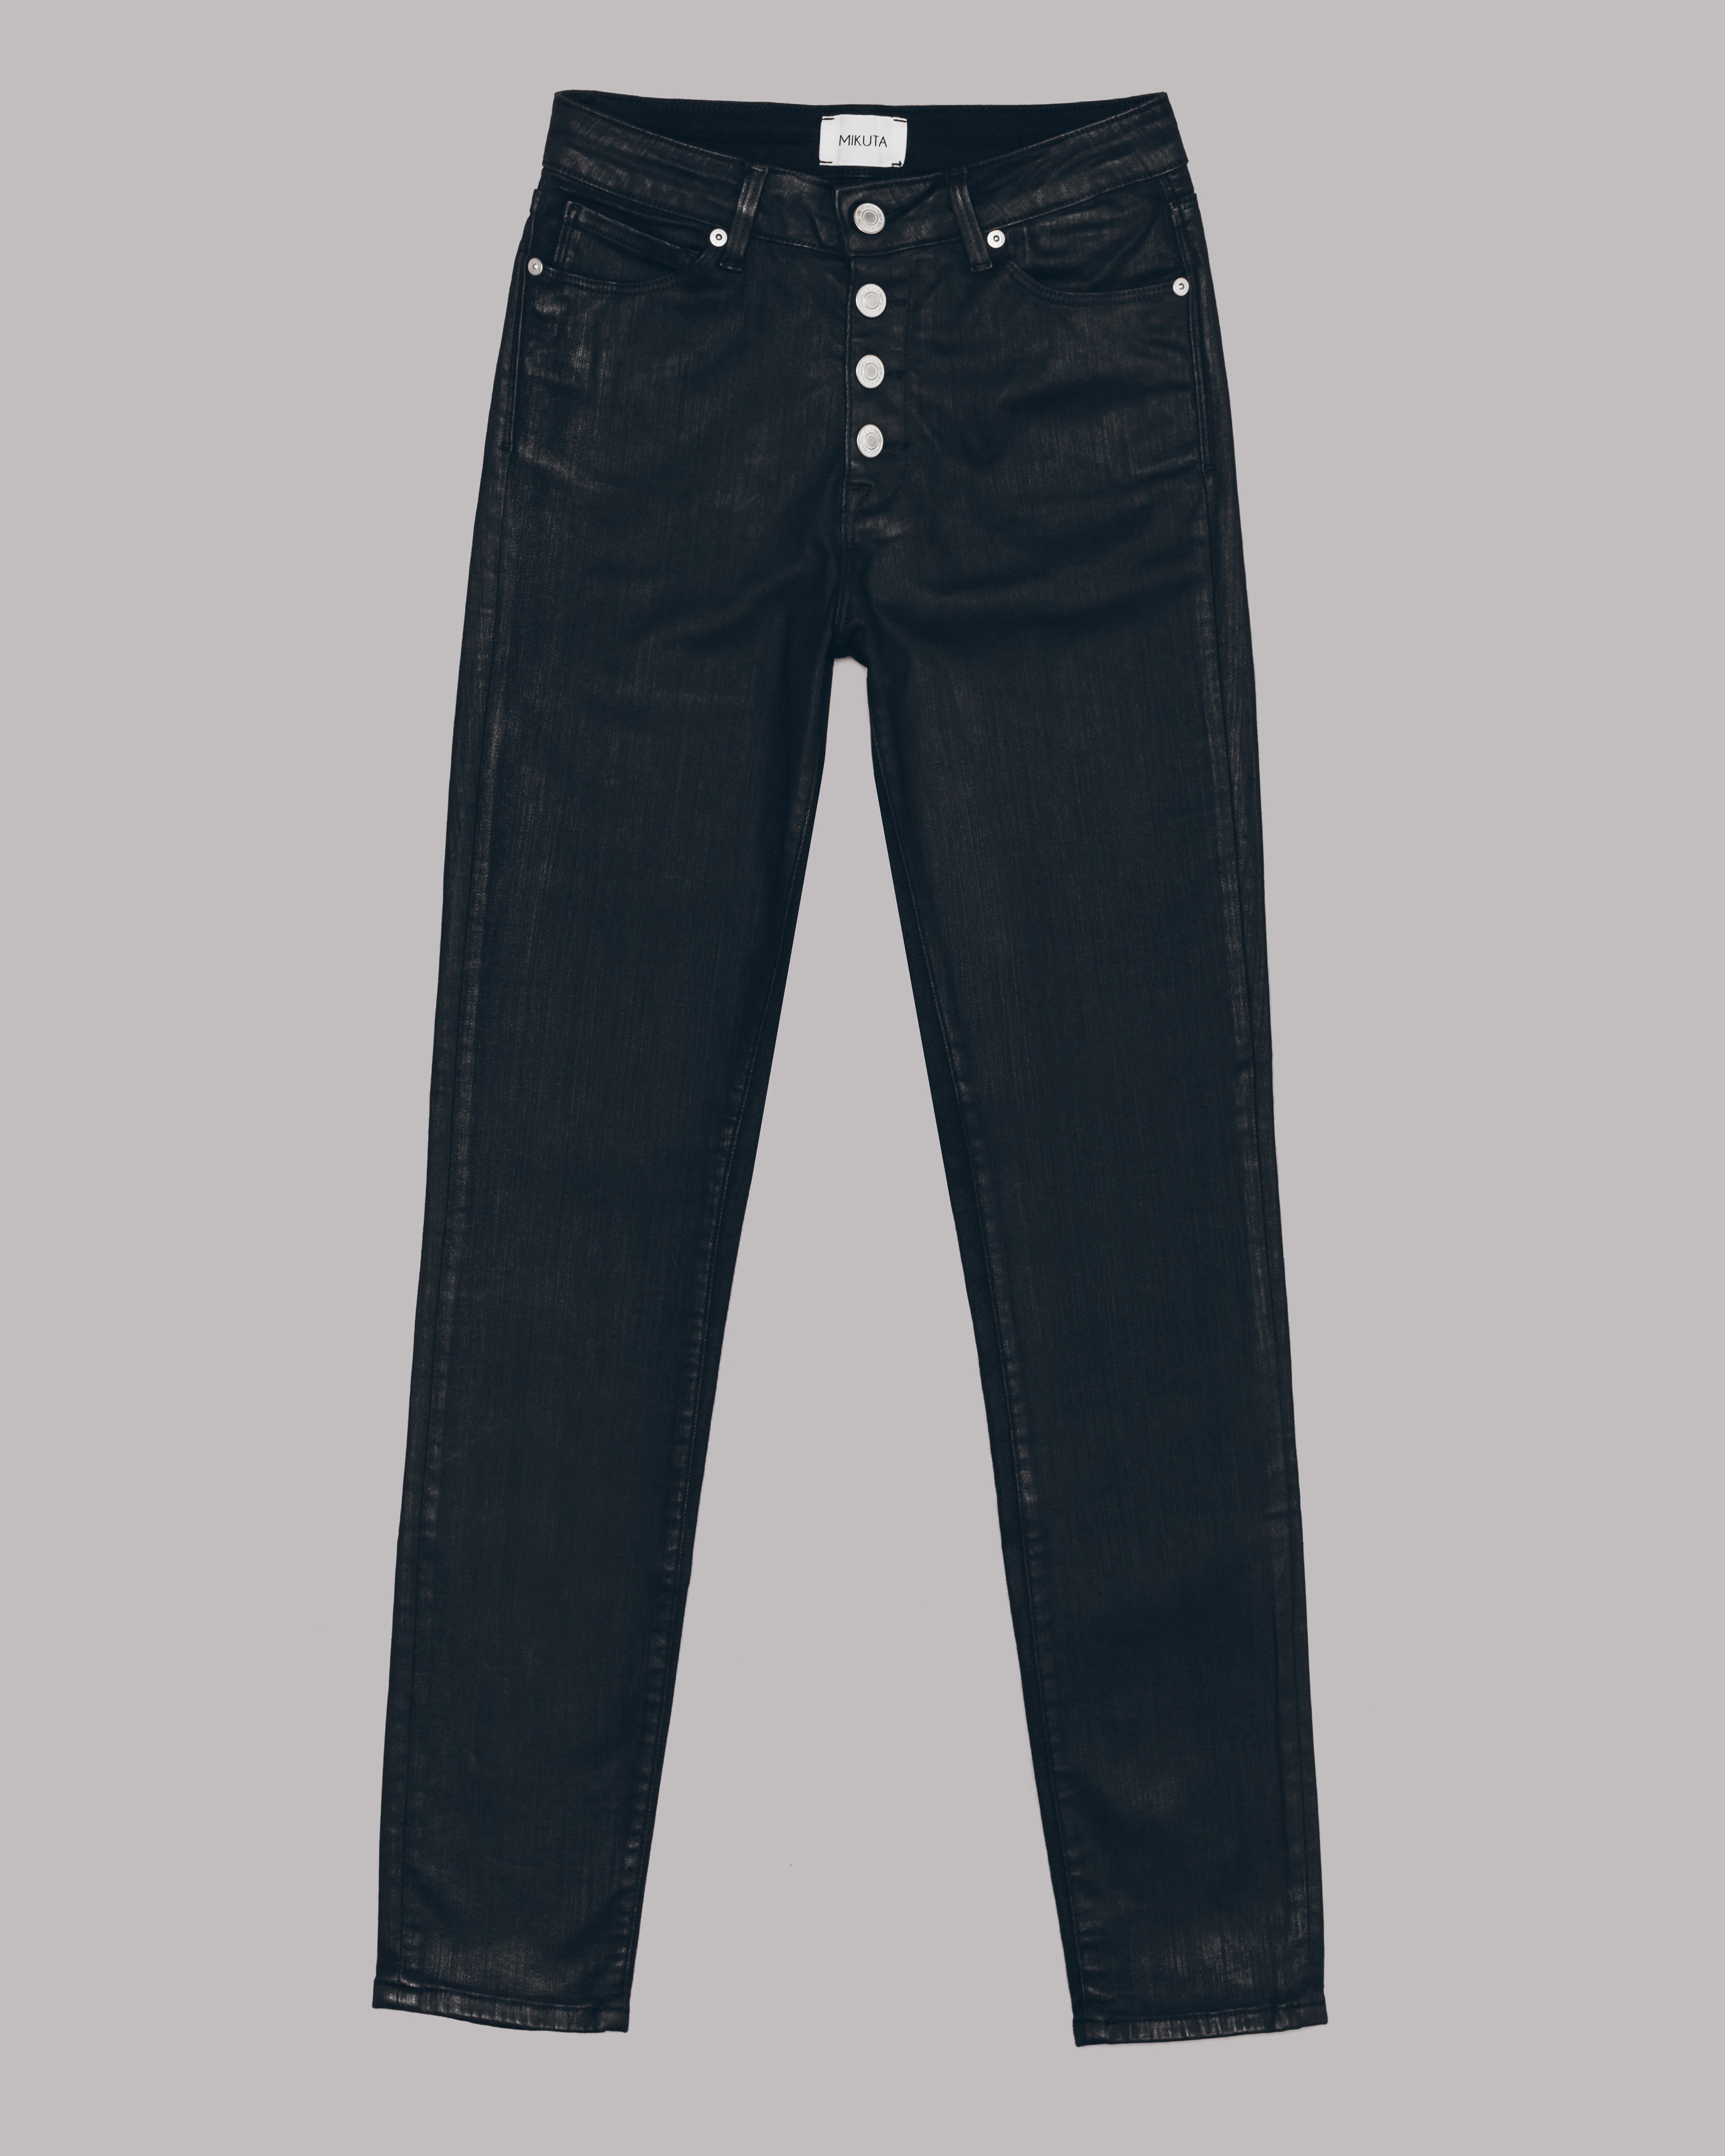 Ninth Hall Rogue Coated Denim Black Skinny Jeans | CoolSprings Galleria